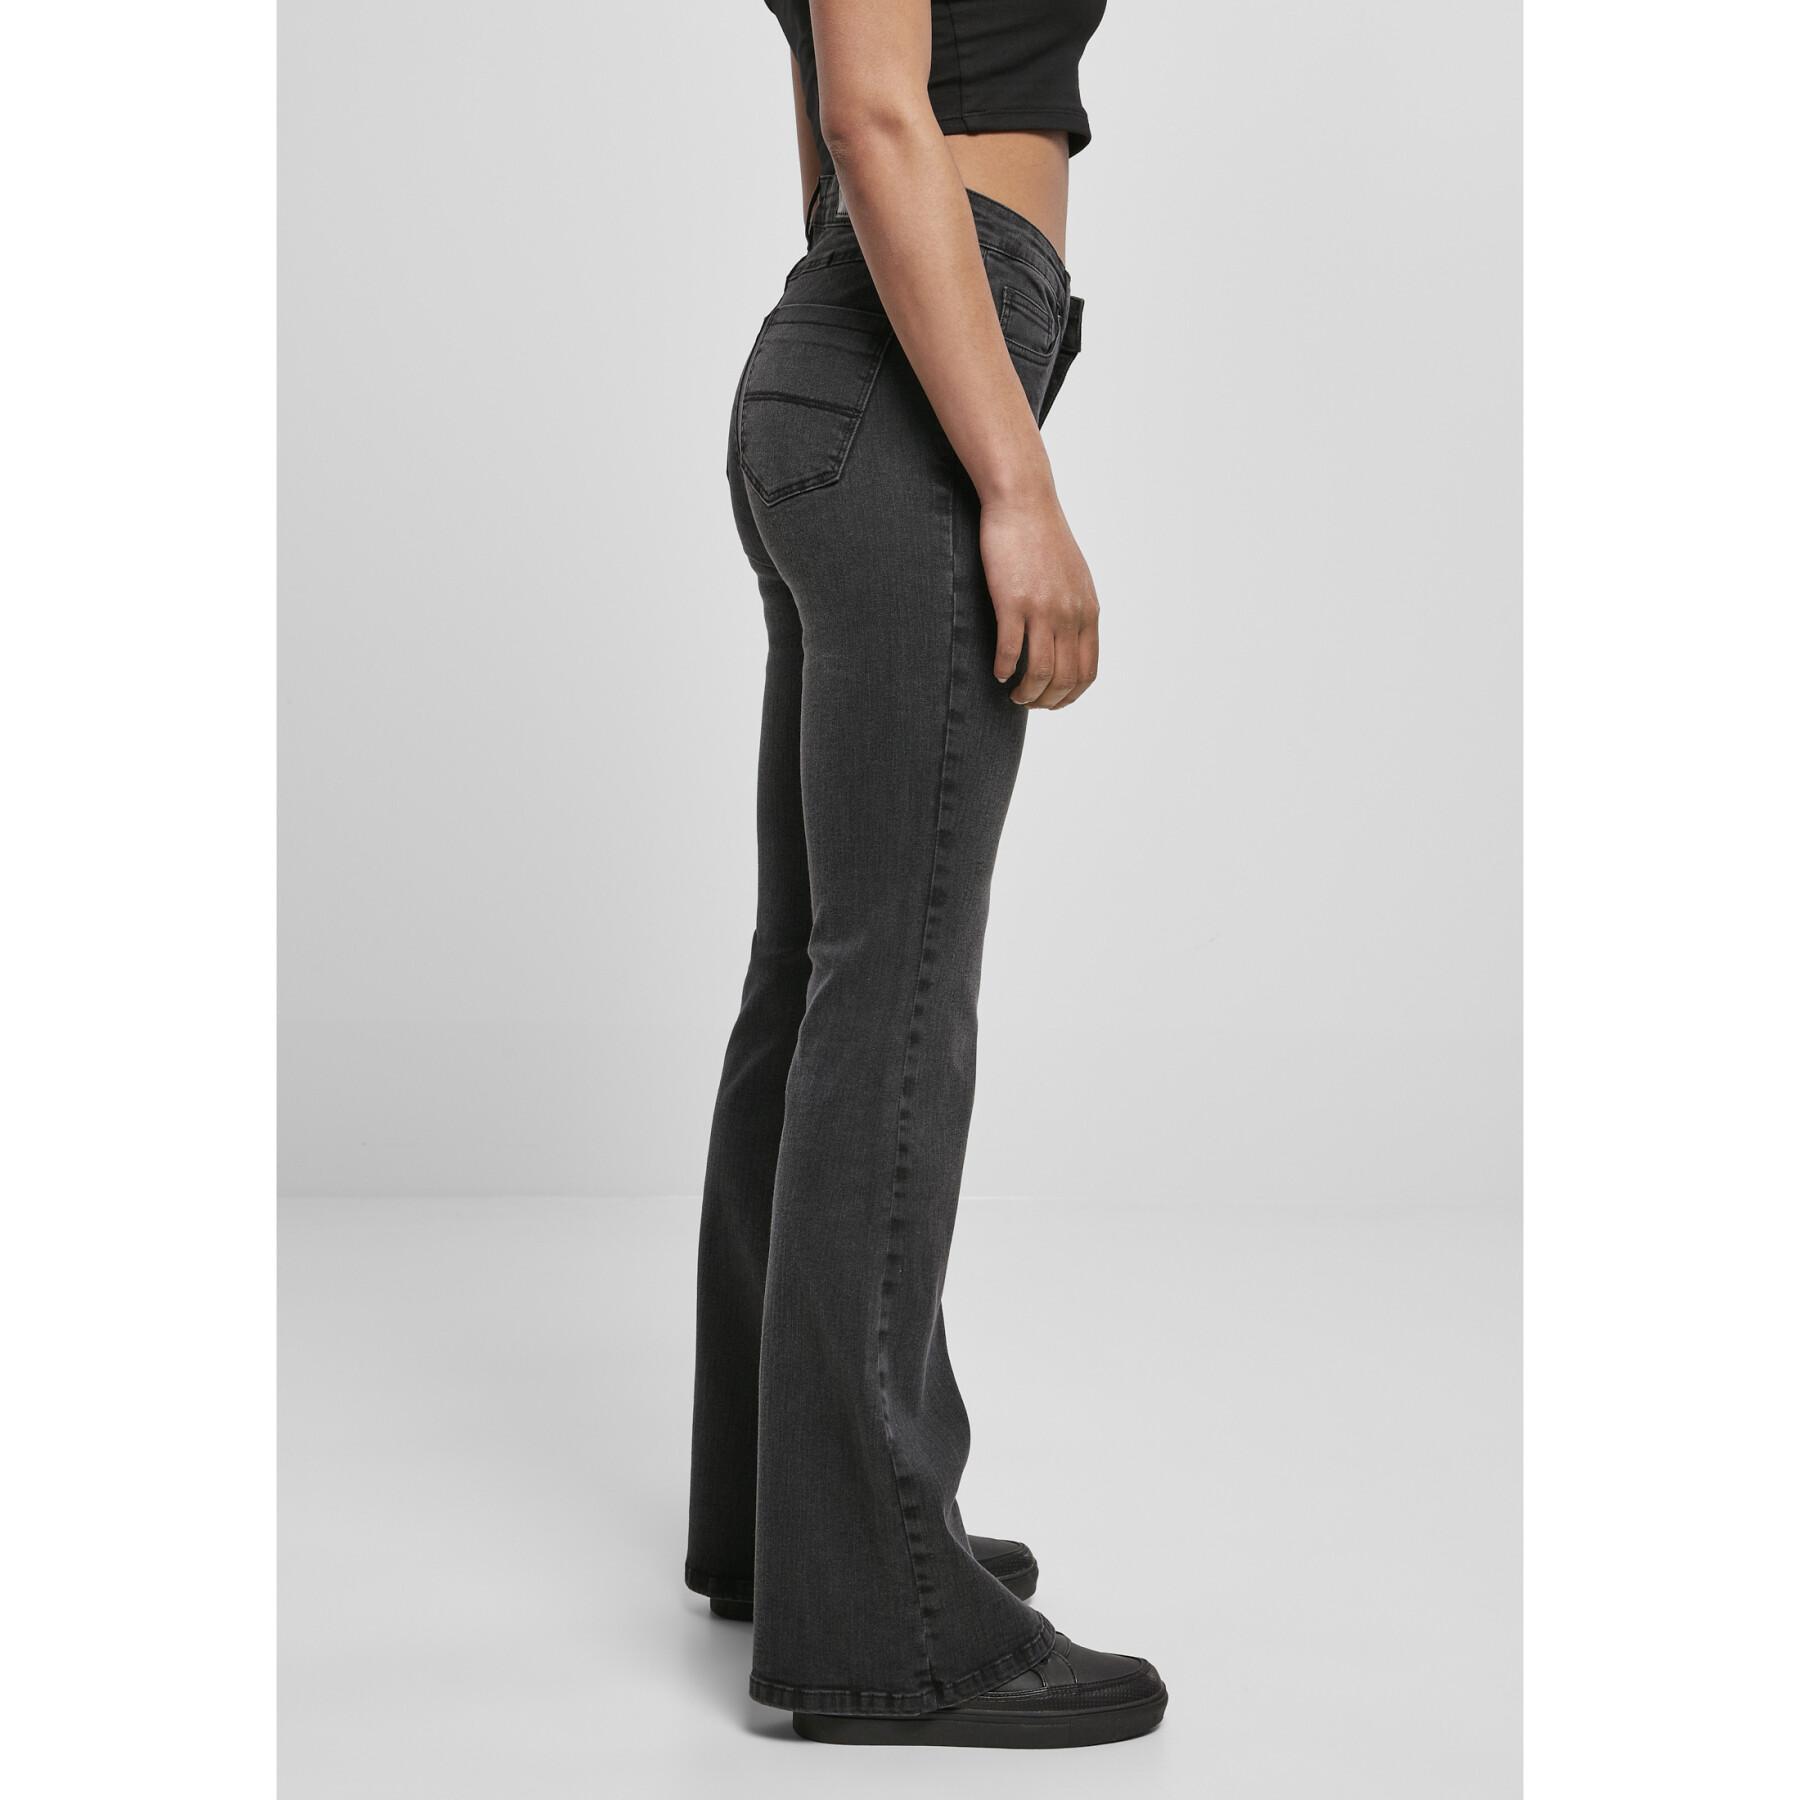 Pantalones vaqueros de mujer Urban Classics high waist flared(GT)